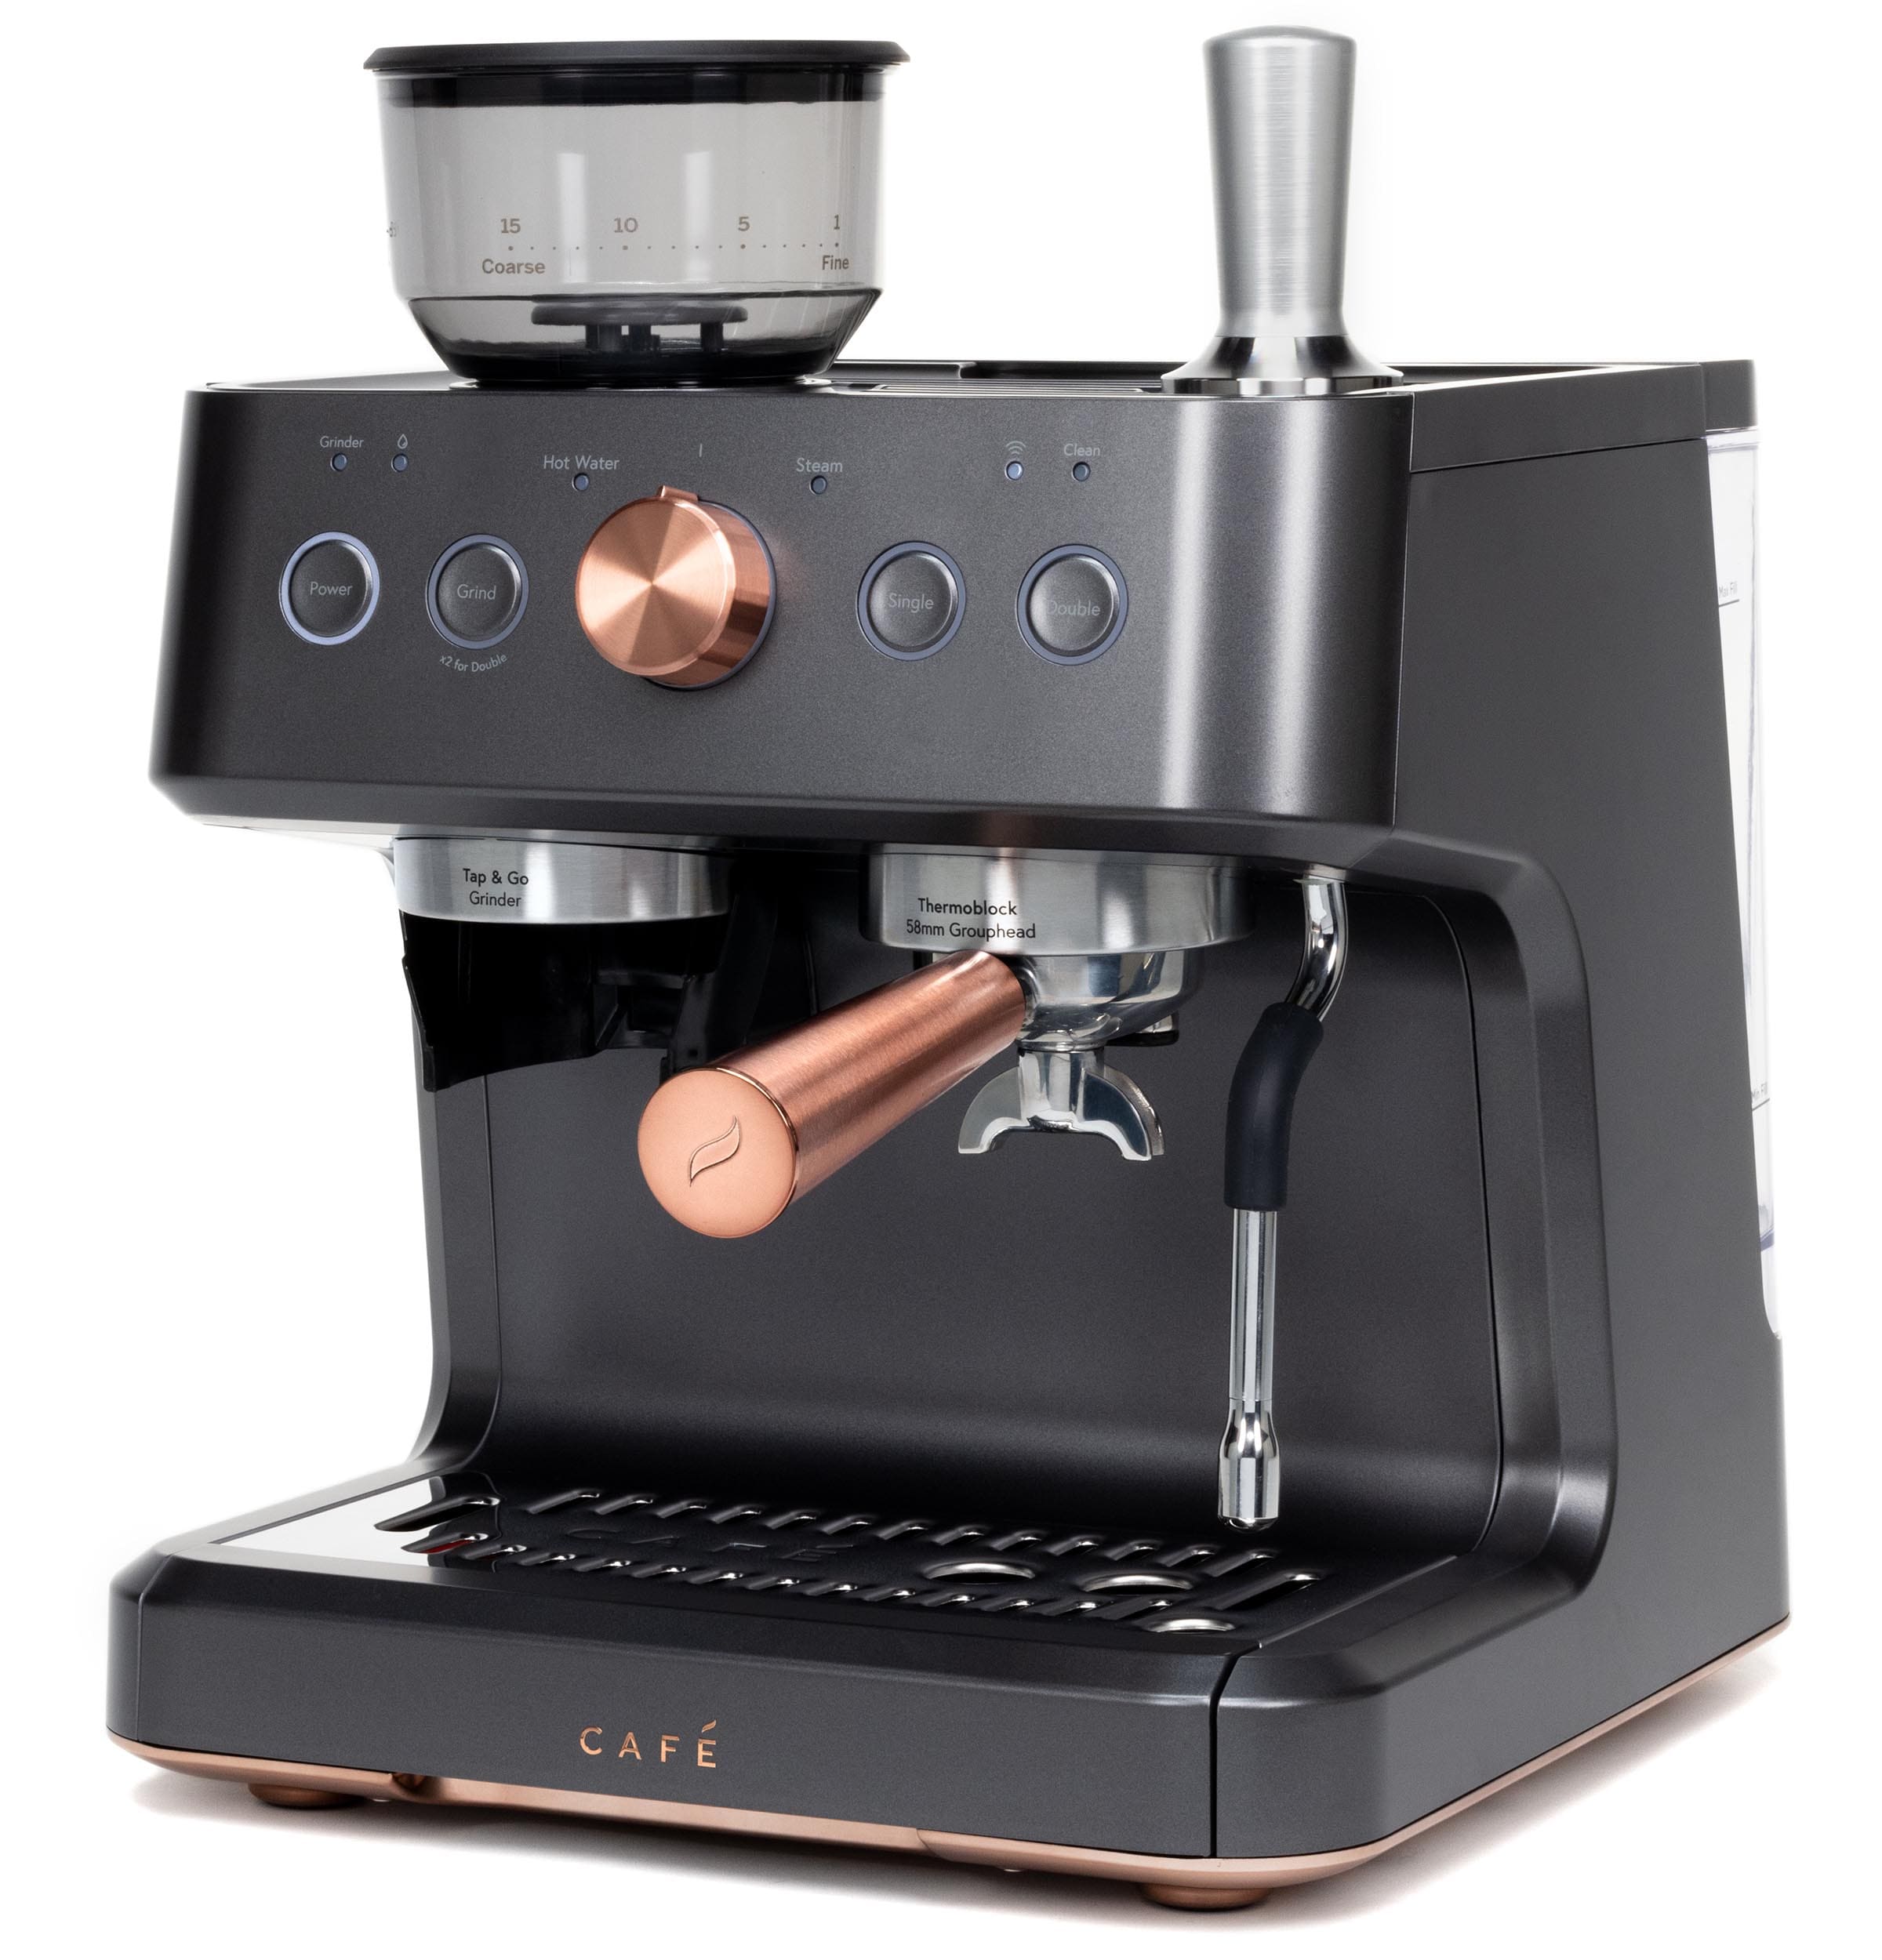 HiBREW Portable Espresso Machine And Travel Case Stand Home Car Coffee Maker